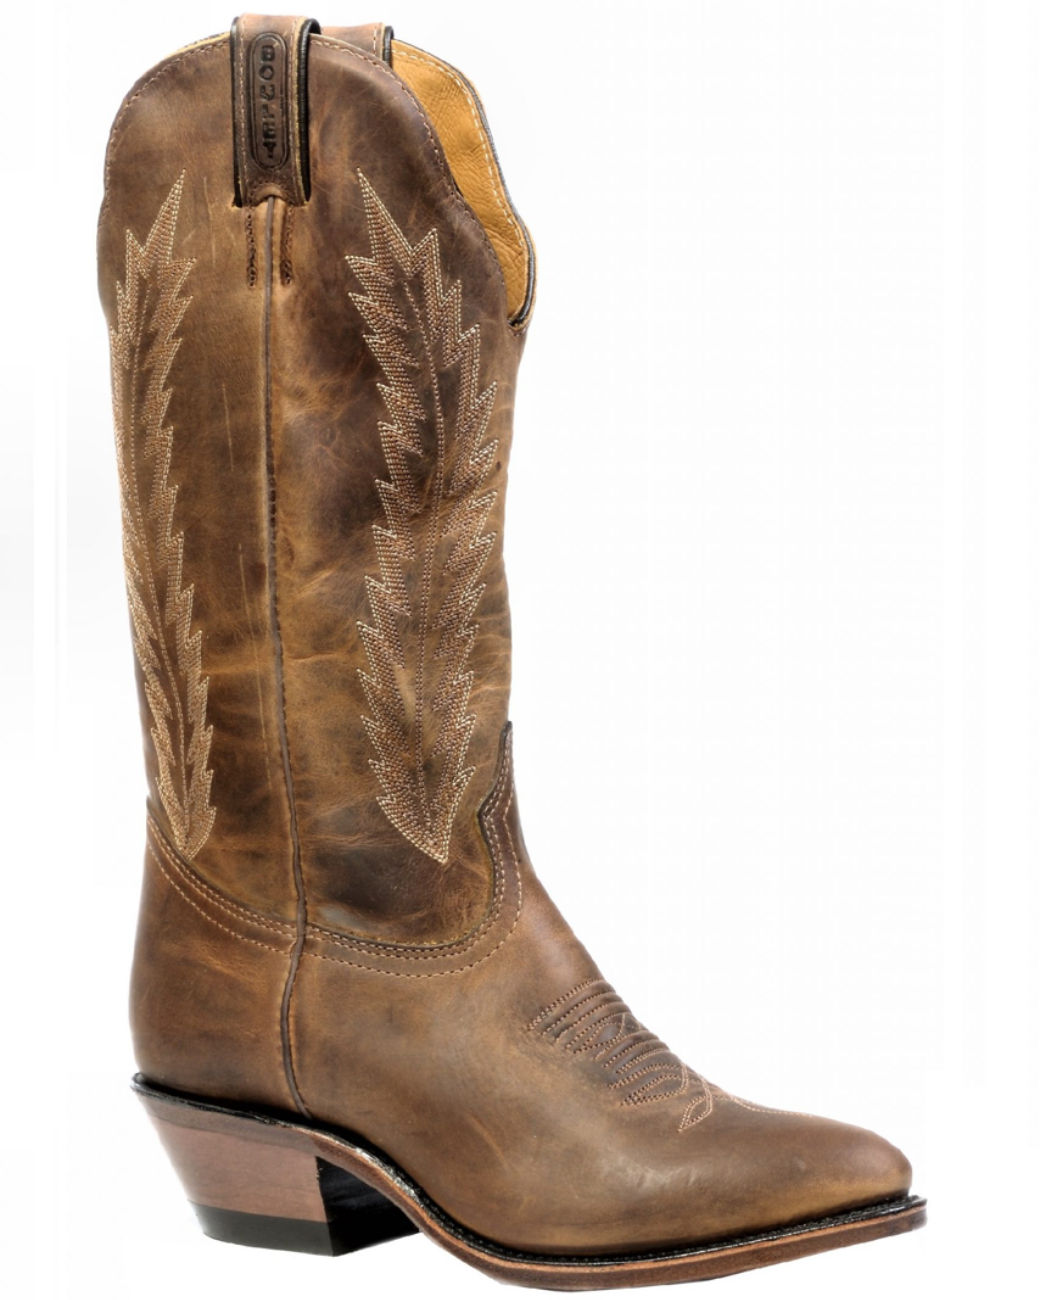 Women's Cowboy Toe Boots